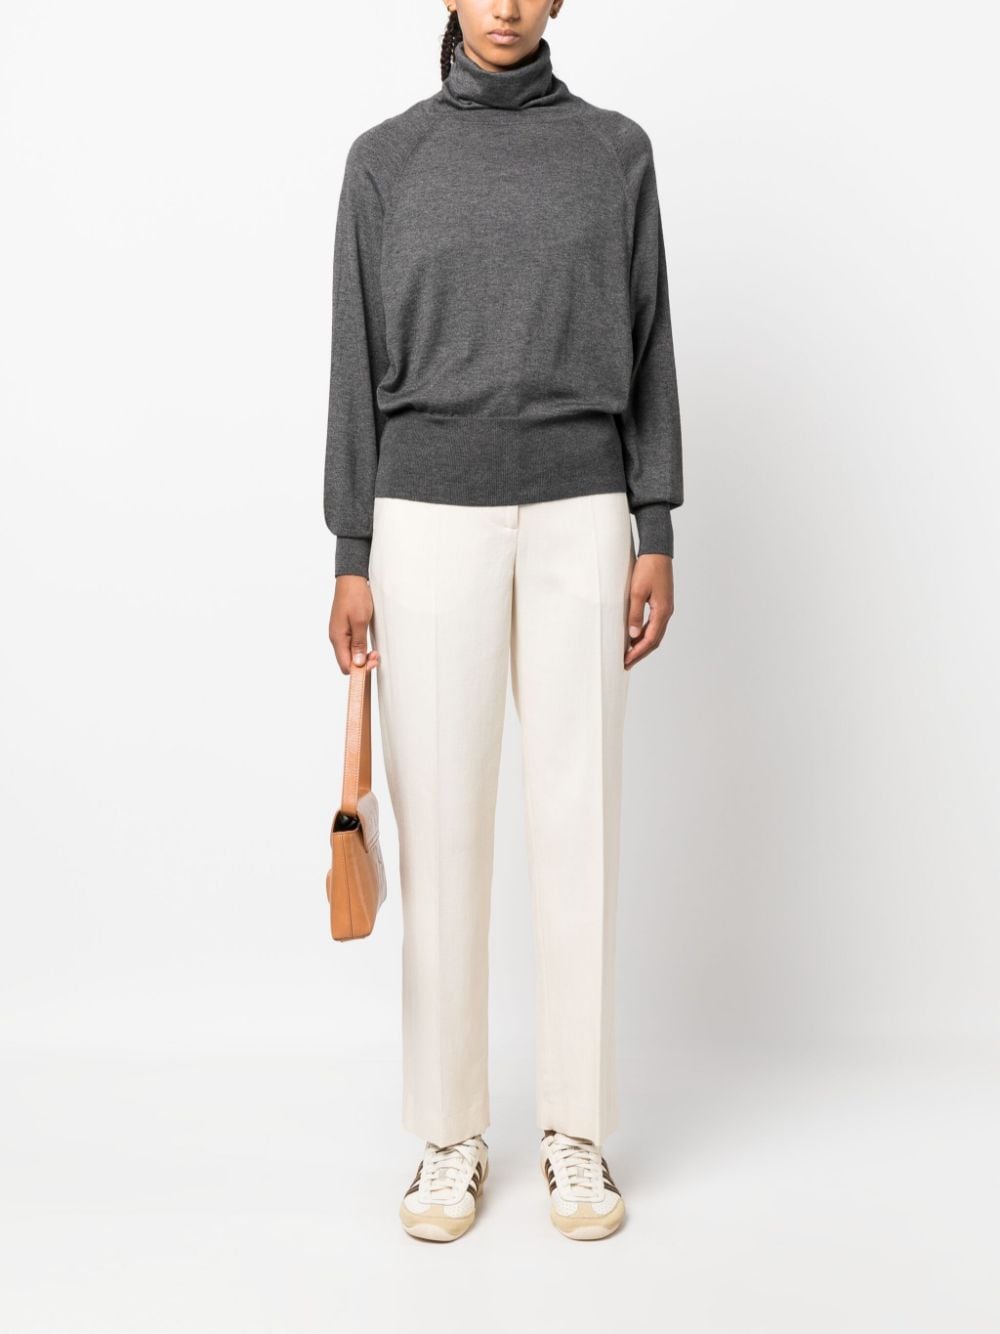 WILD CASHMERE Elegant Grey Cashmere and Silk Turtleneck Sweater